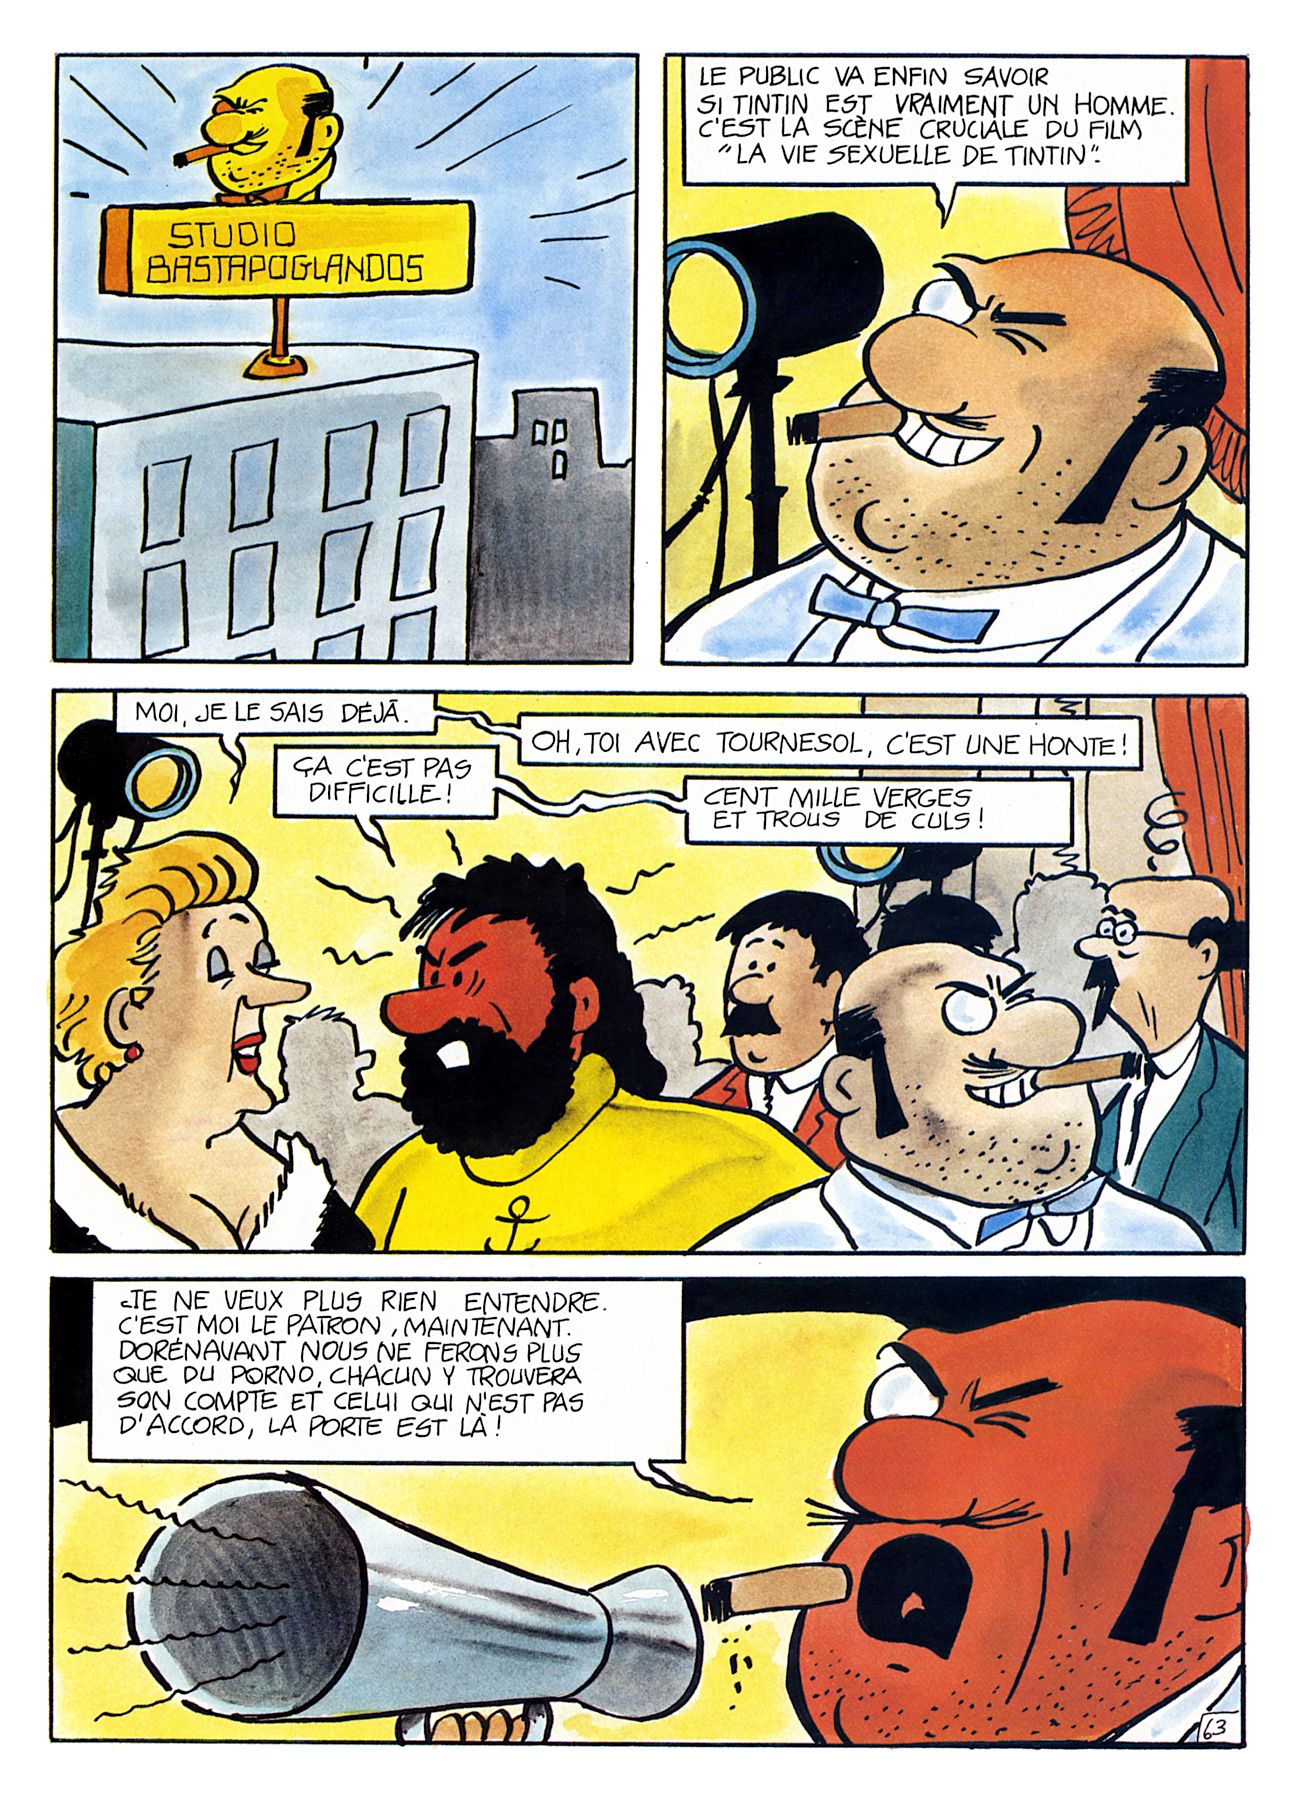 La-Vie-Sexuelle-De-Tintin-1992-All-64-pages-French-page63--Gotofap.tk--96988732.jpg